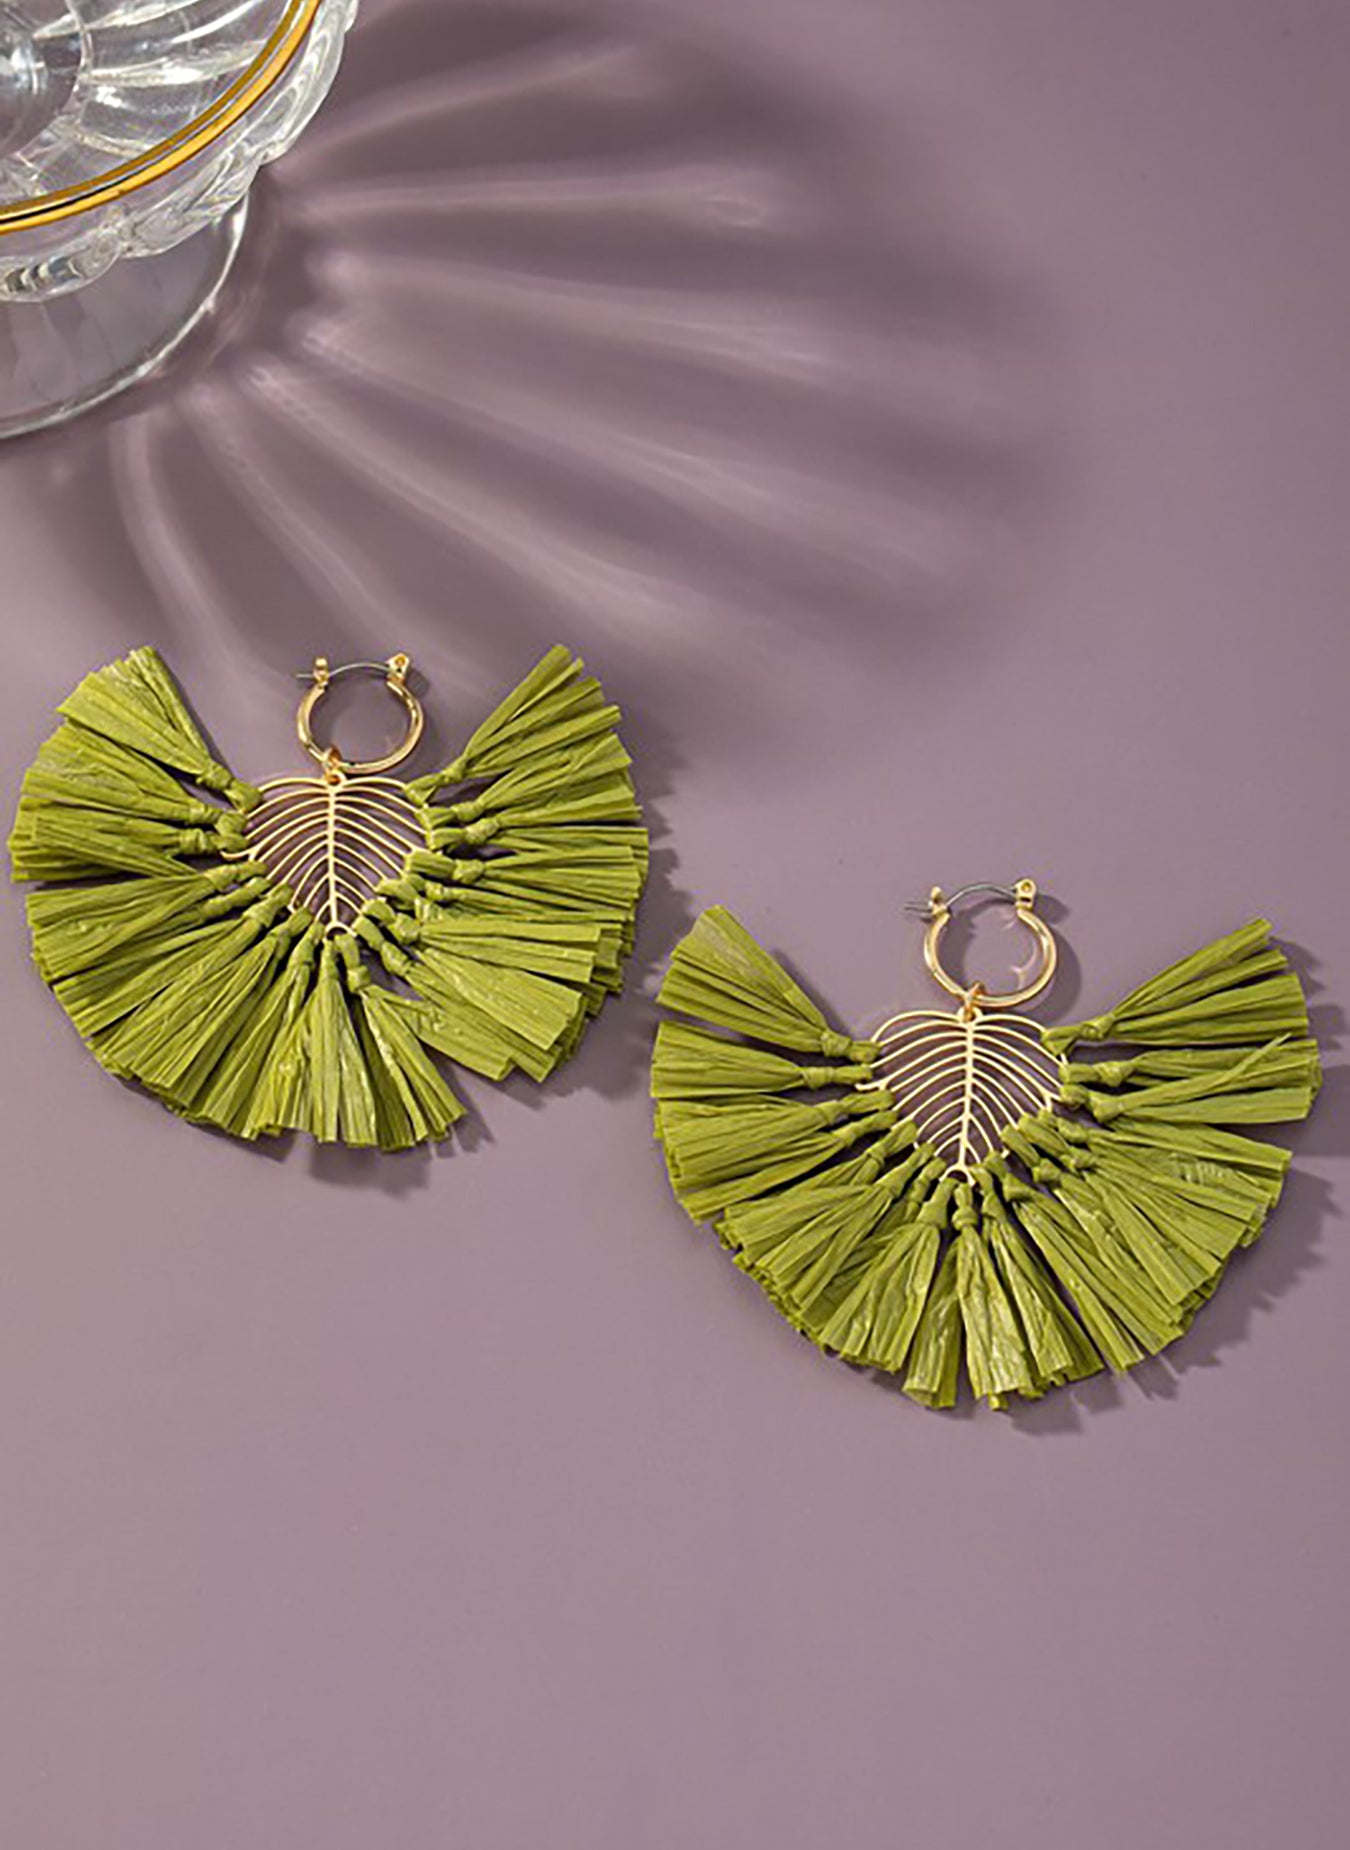 Statement earrings with raffia straw leaf drop